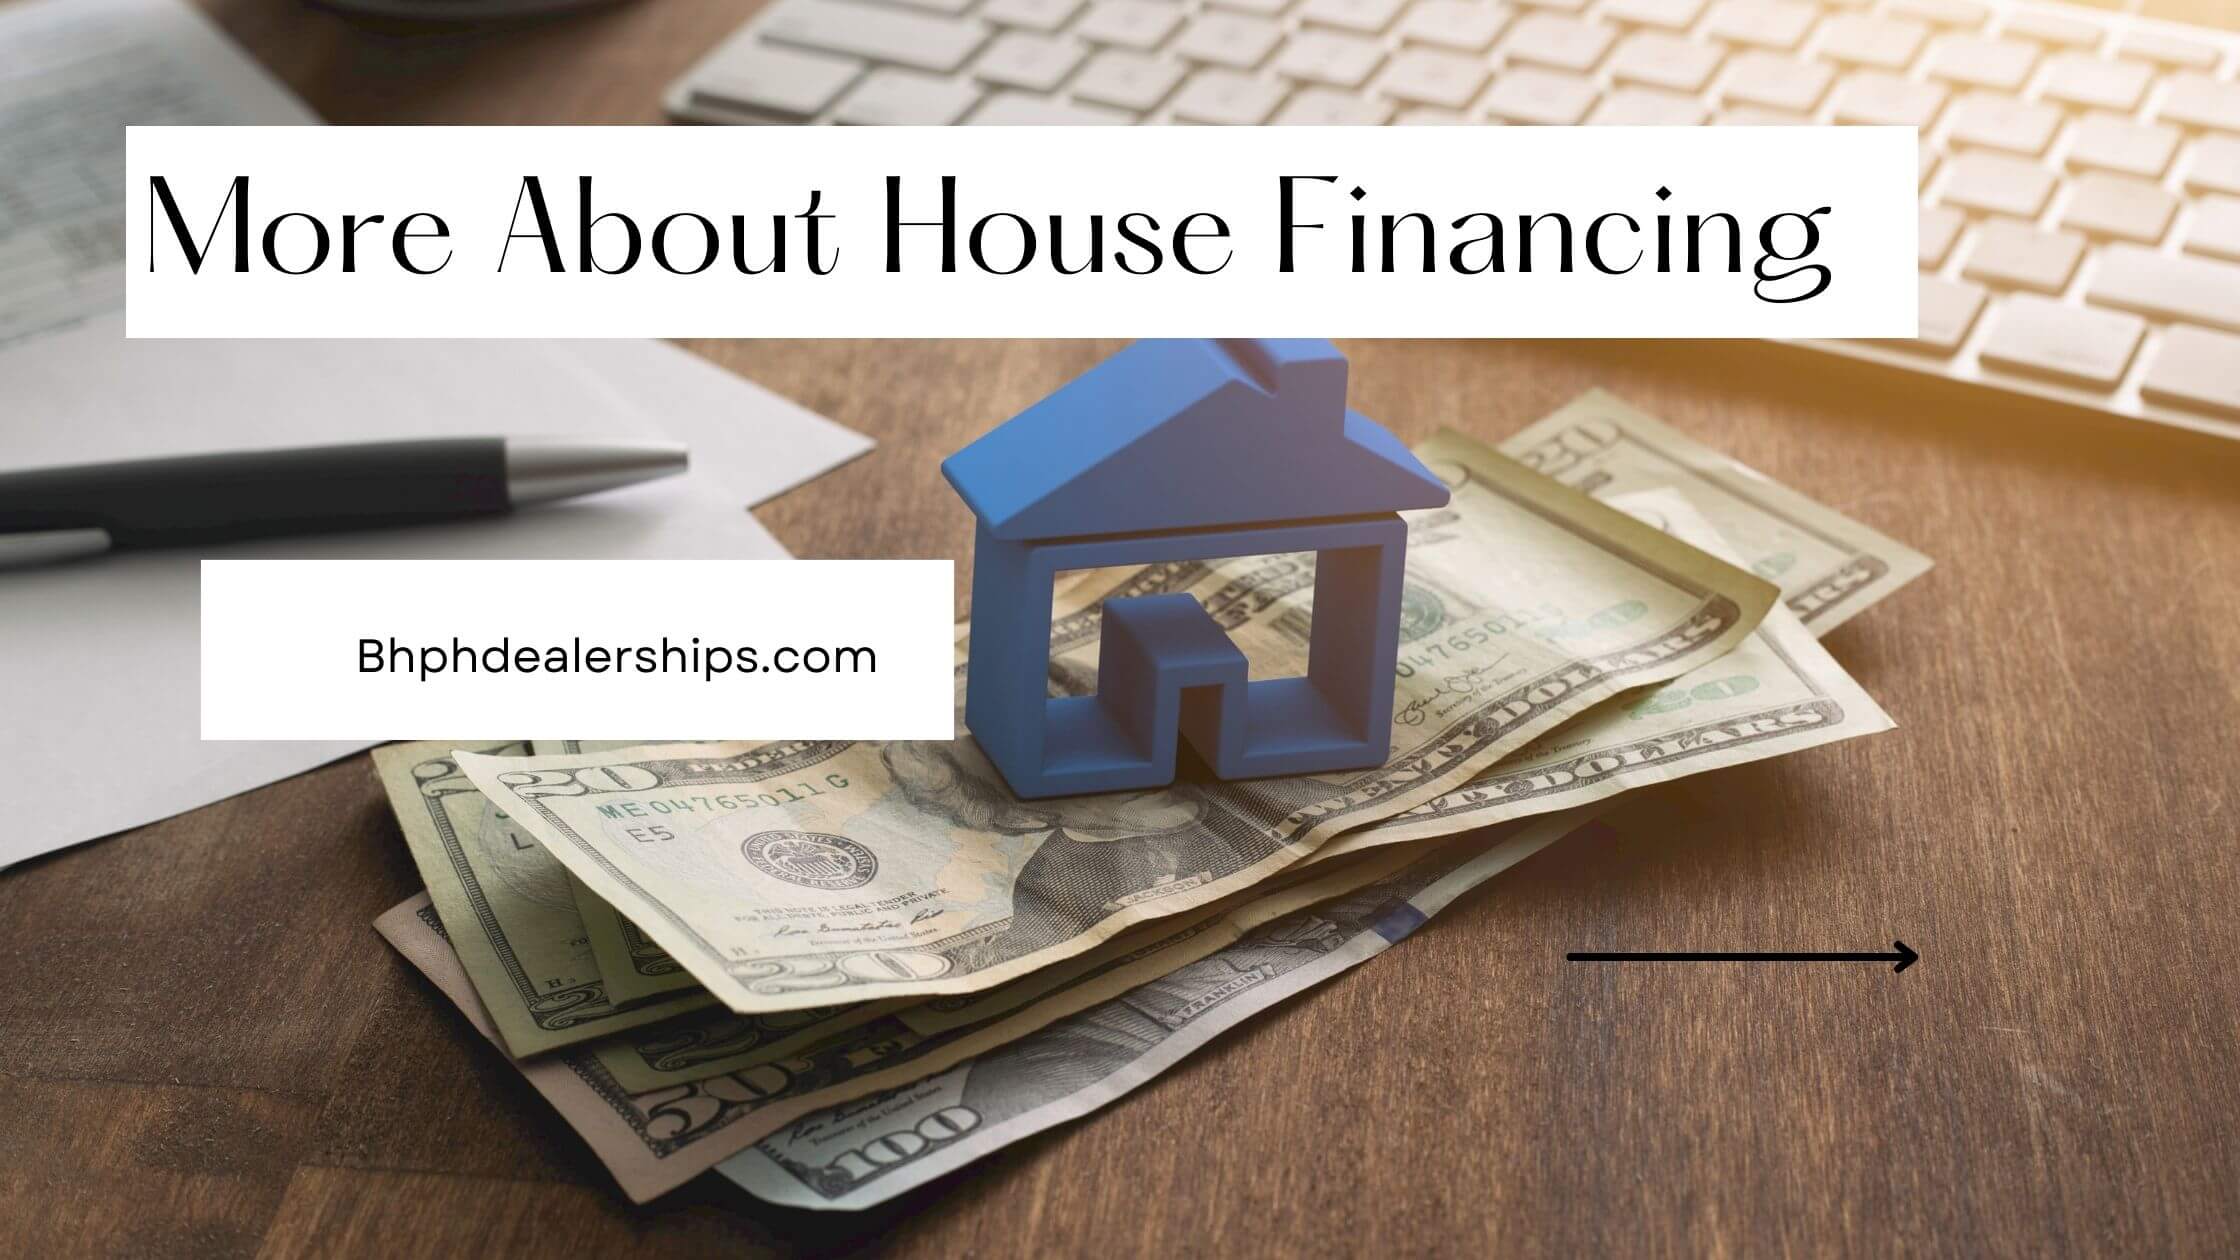 House Financing